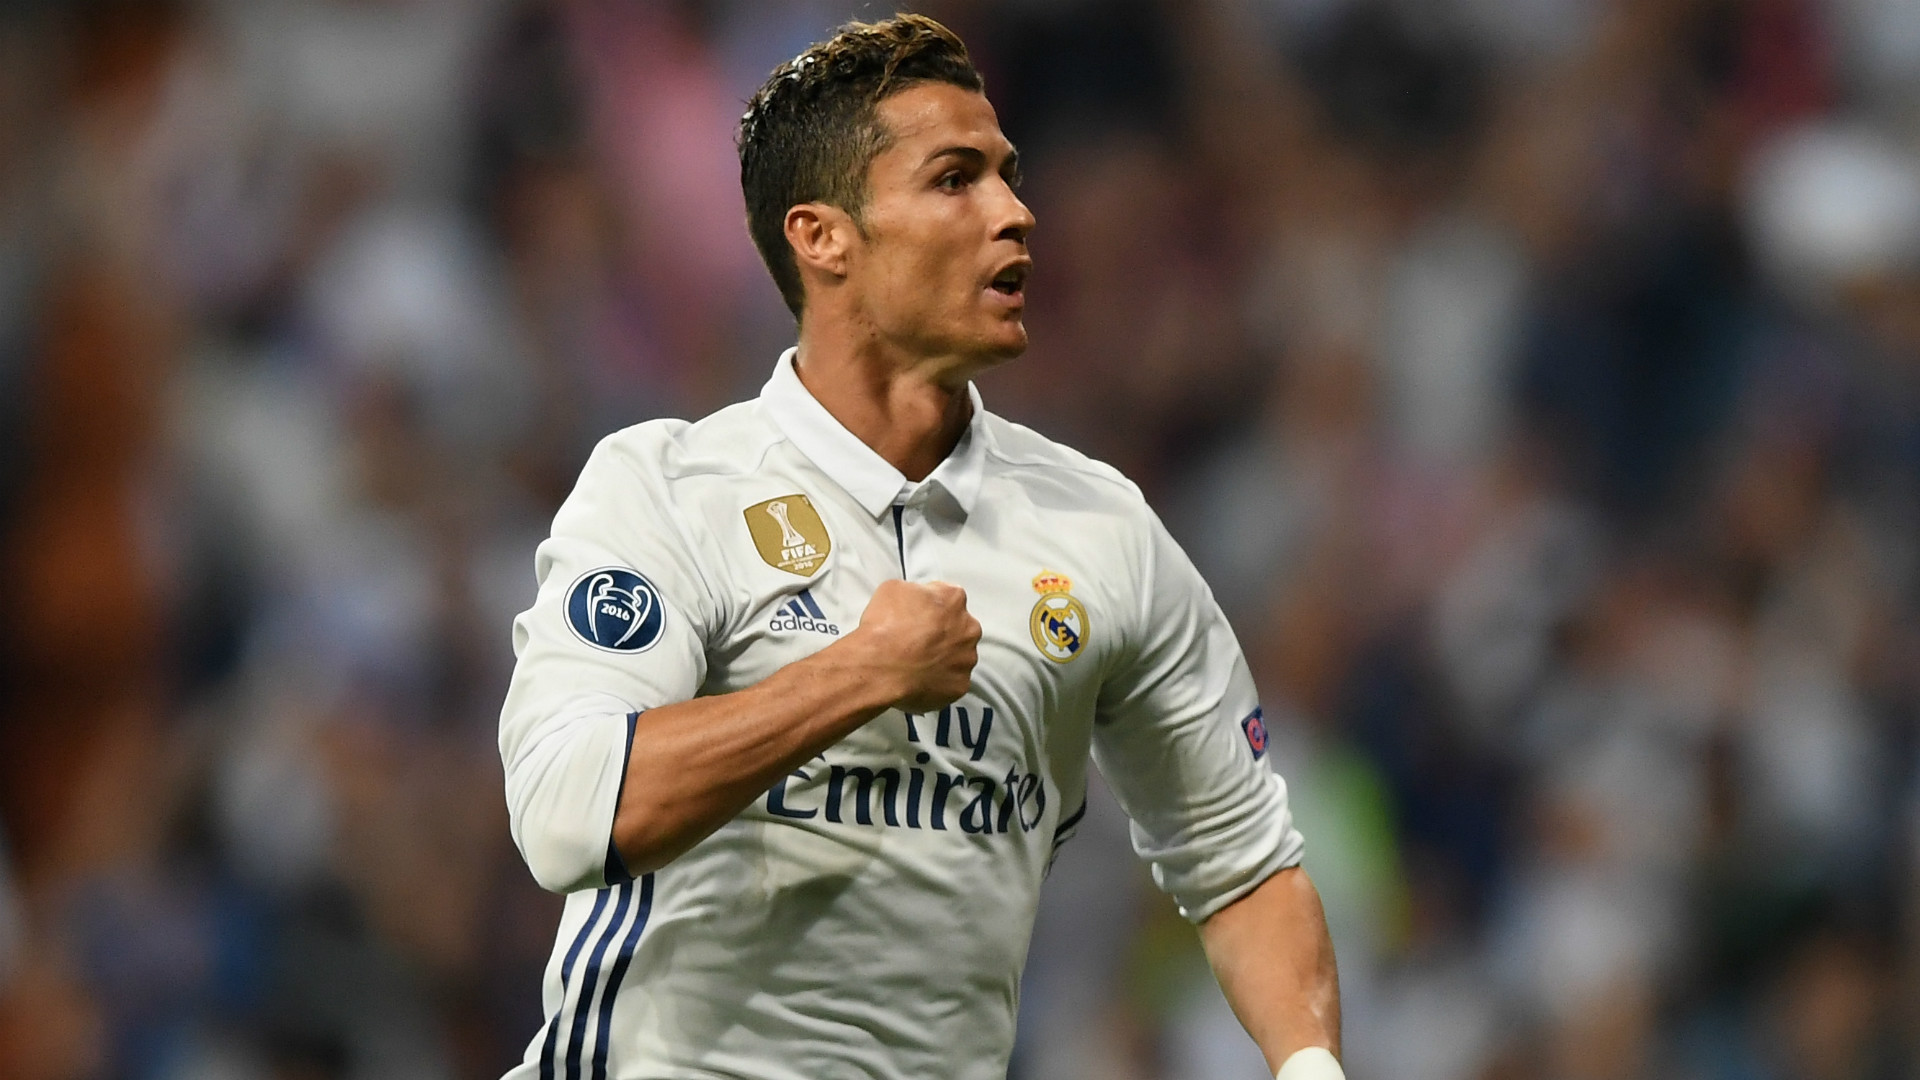 Cristiano Ronaldo Salary Per Week In Rands